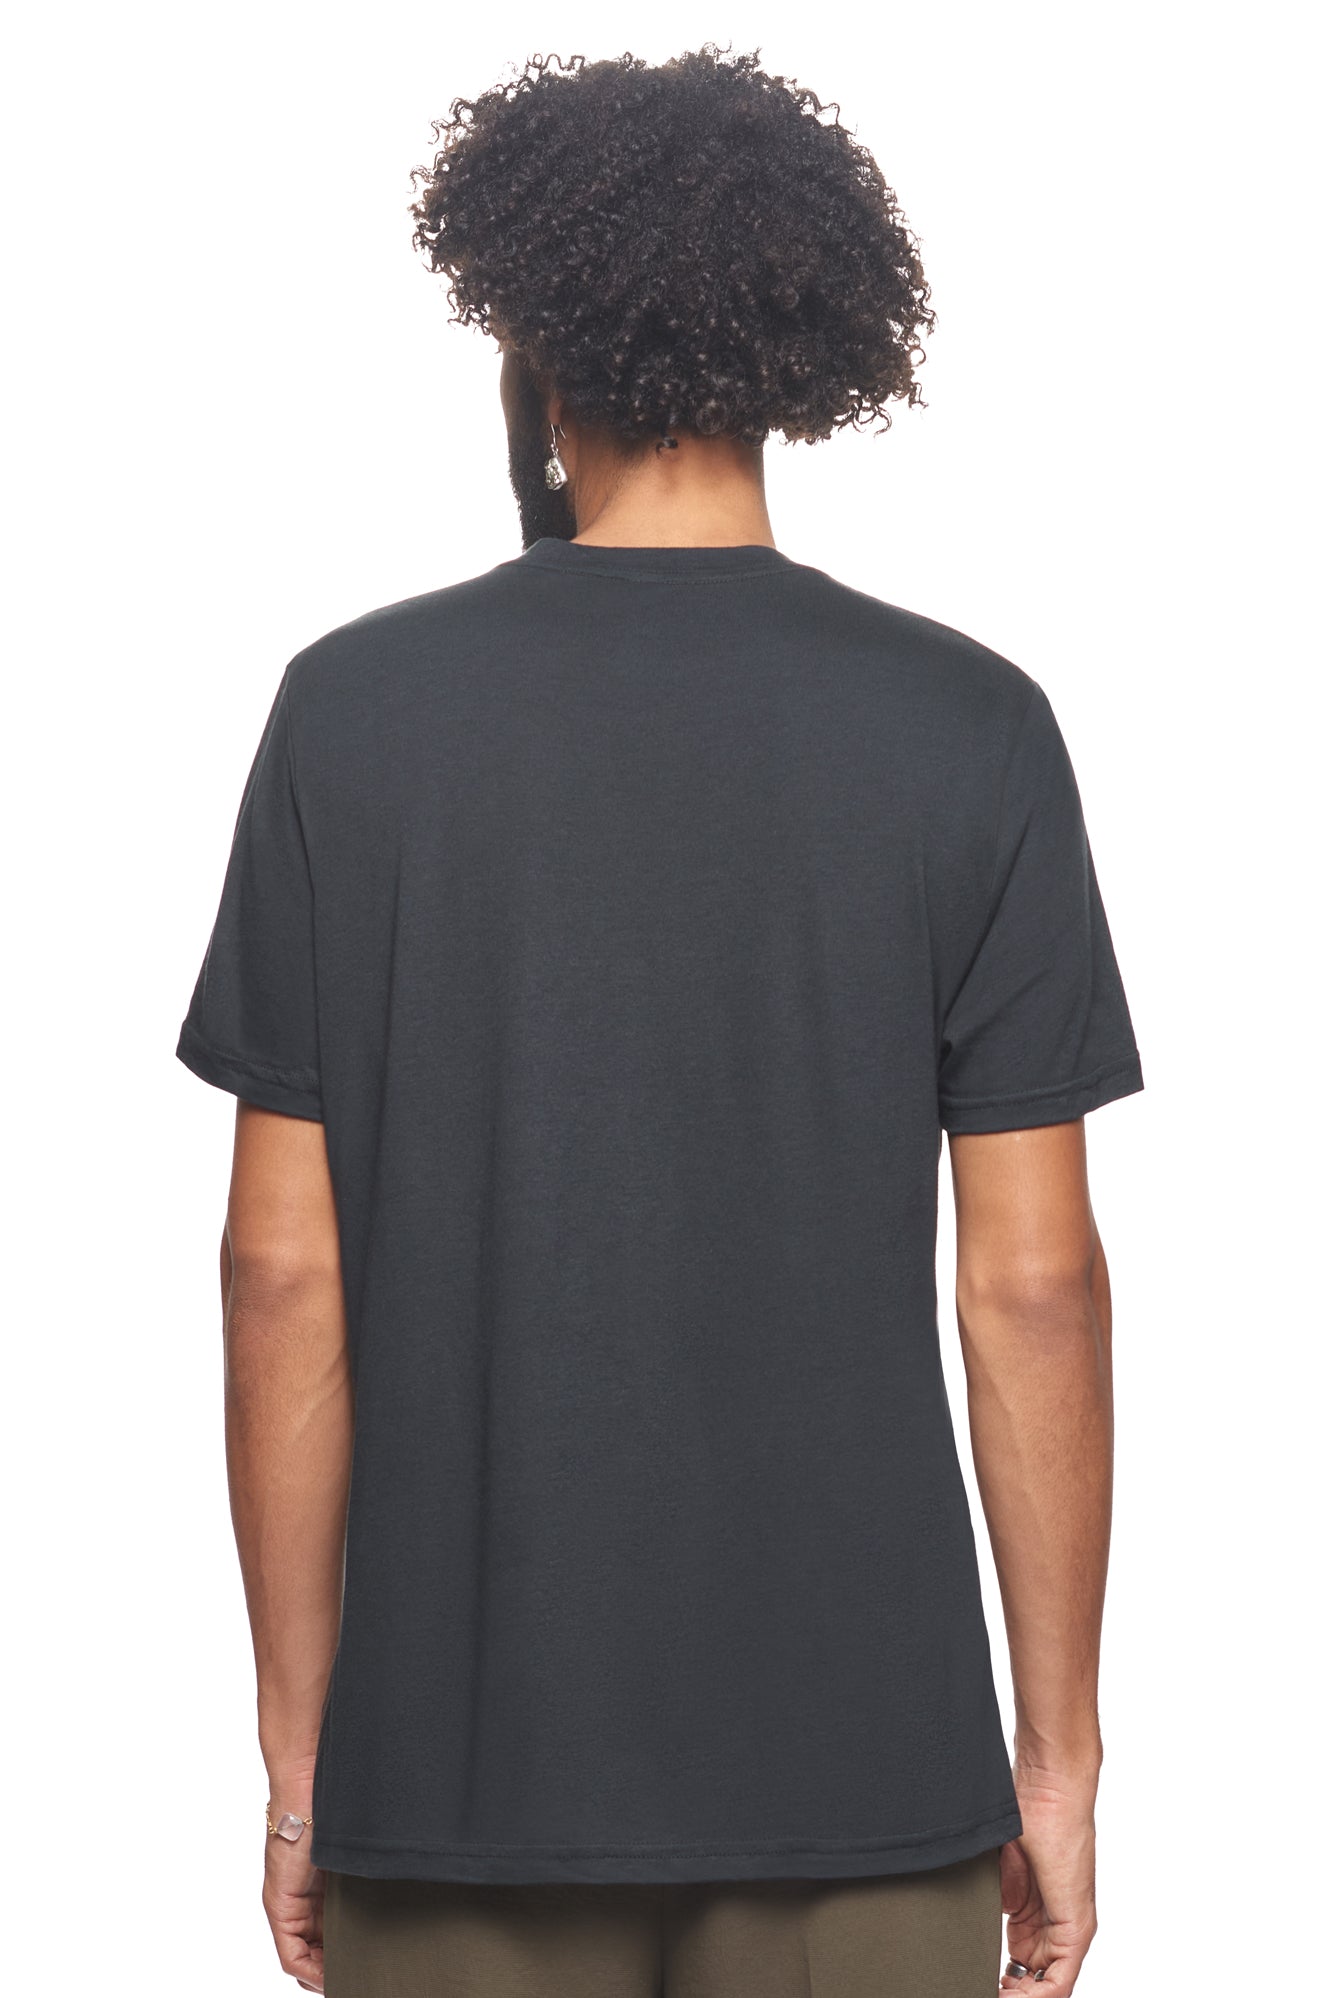 Expert Brand Wholesale Sustainable Eco-Friendly Hemp Organic Cotton Men's crewneck T-Shirt Made in the USA 3#black